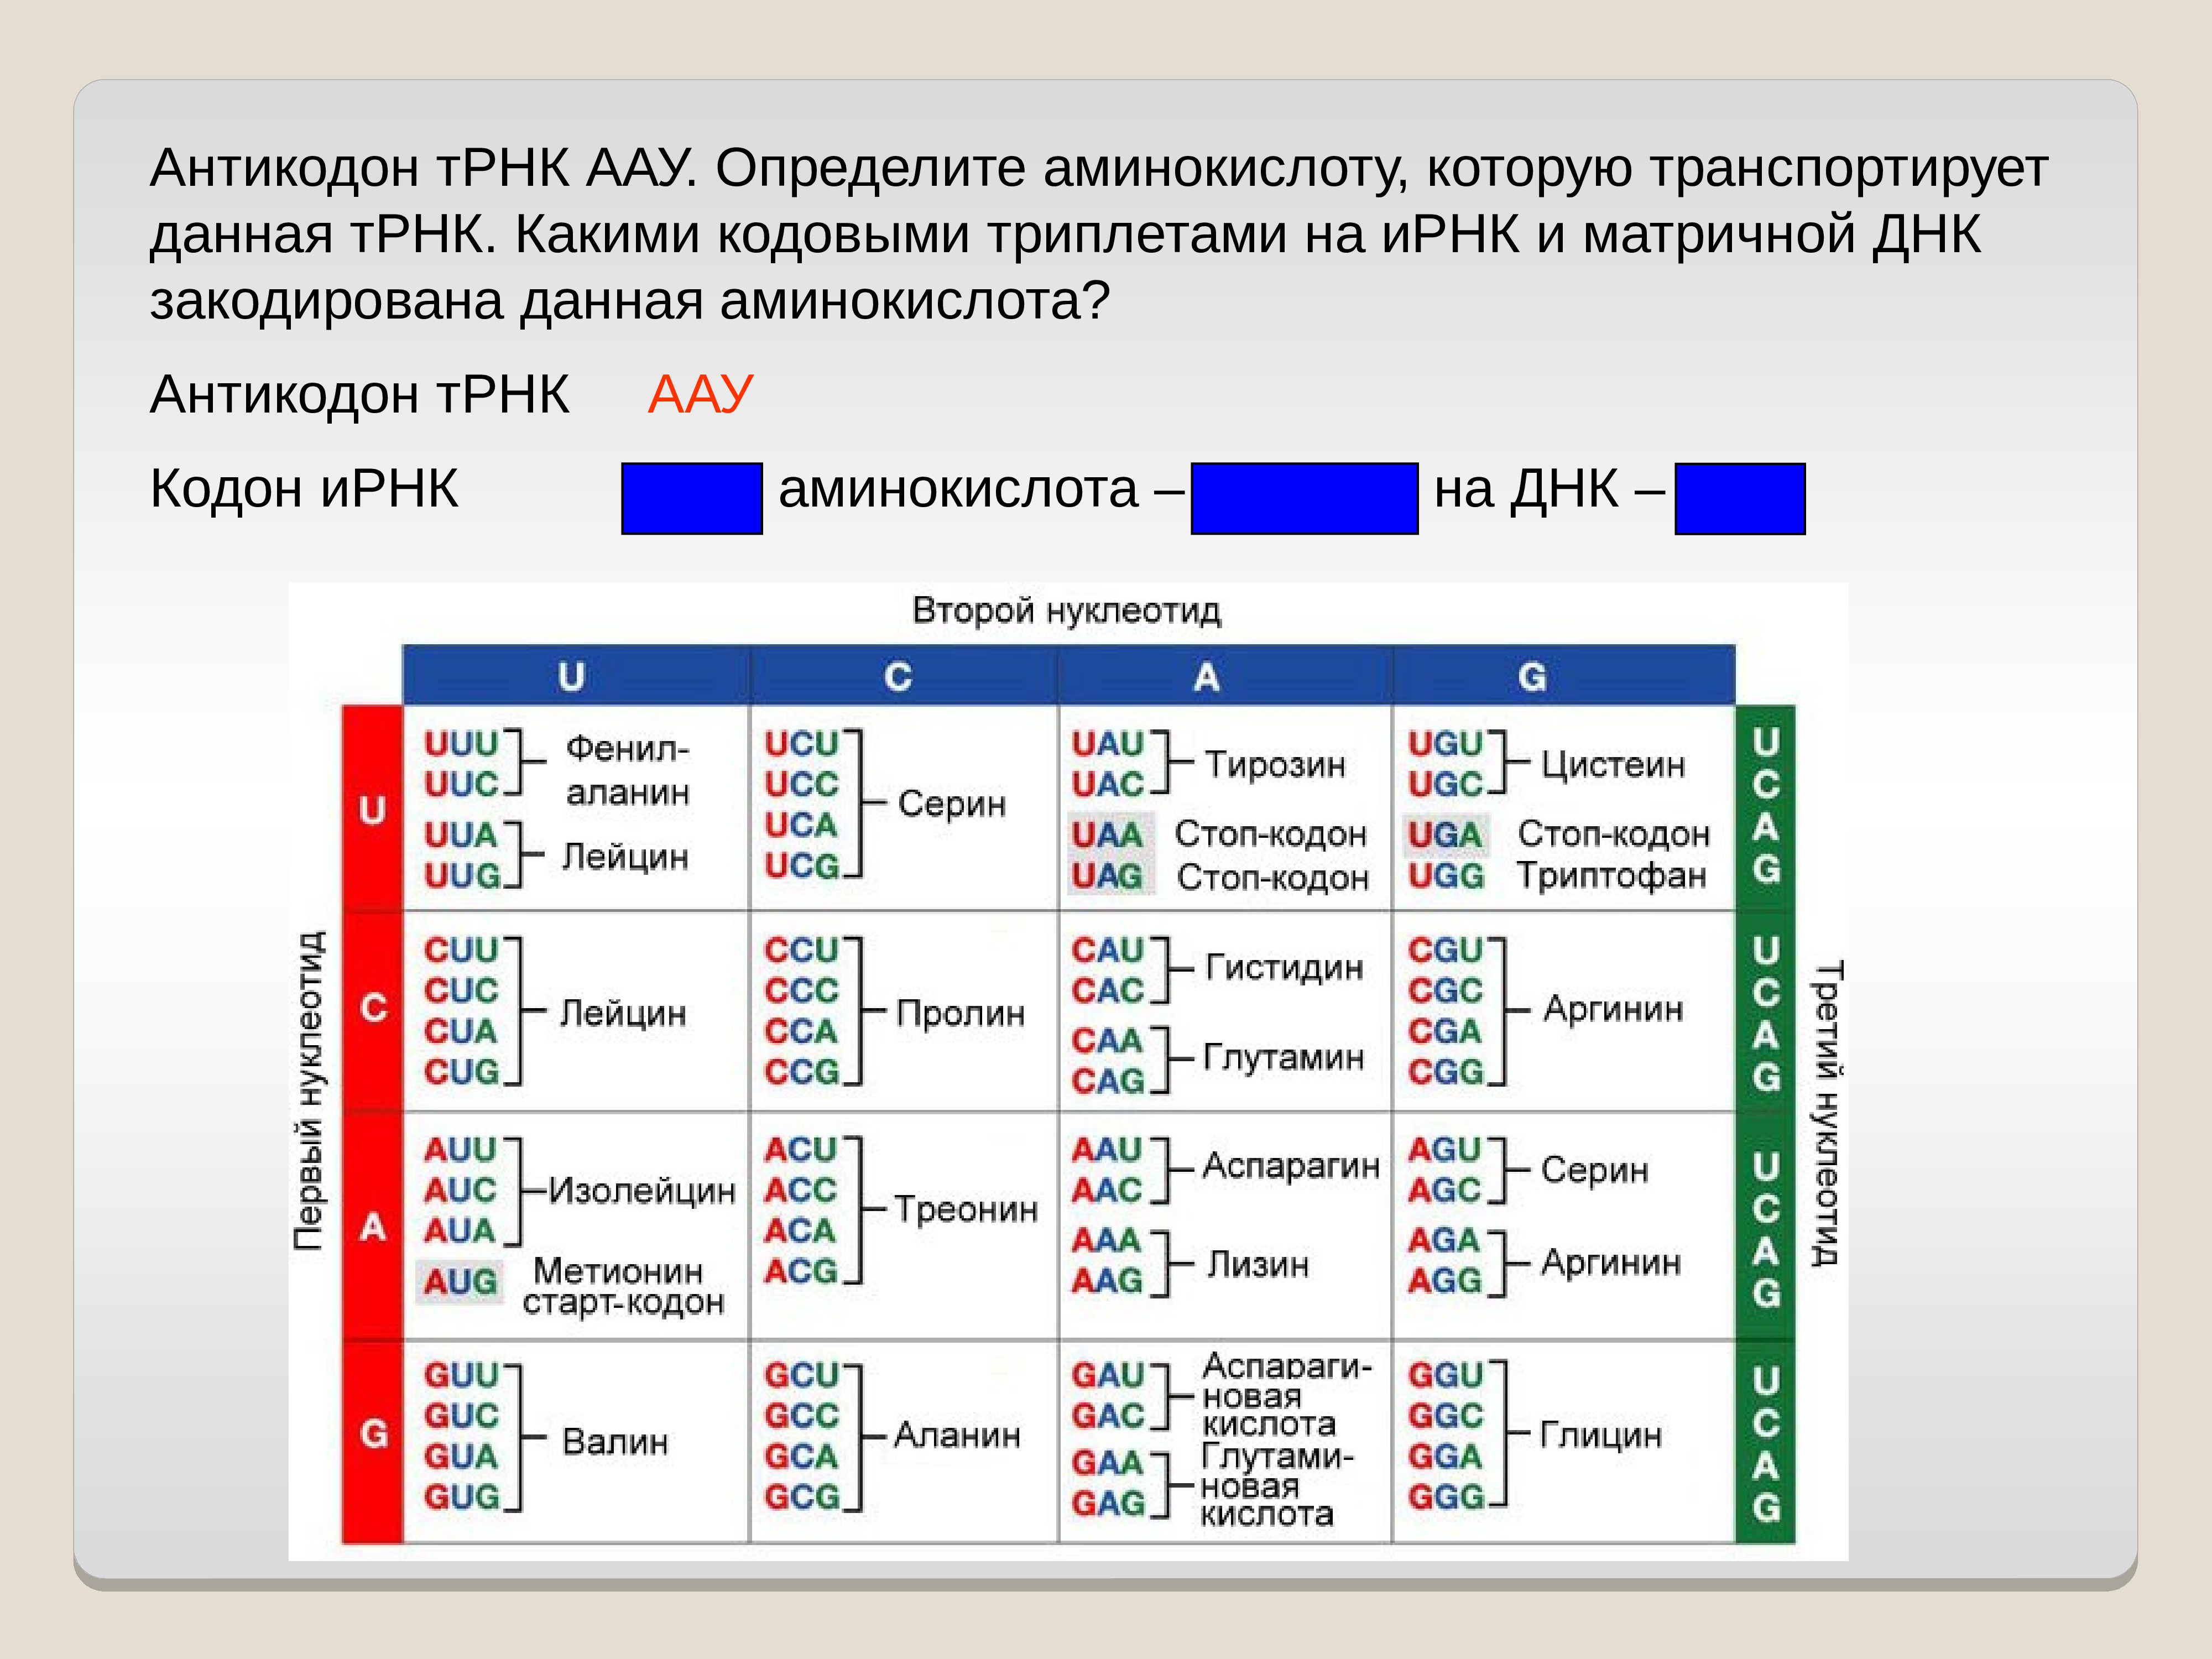 Таблица антикодонов ТРНК